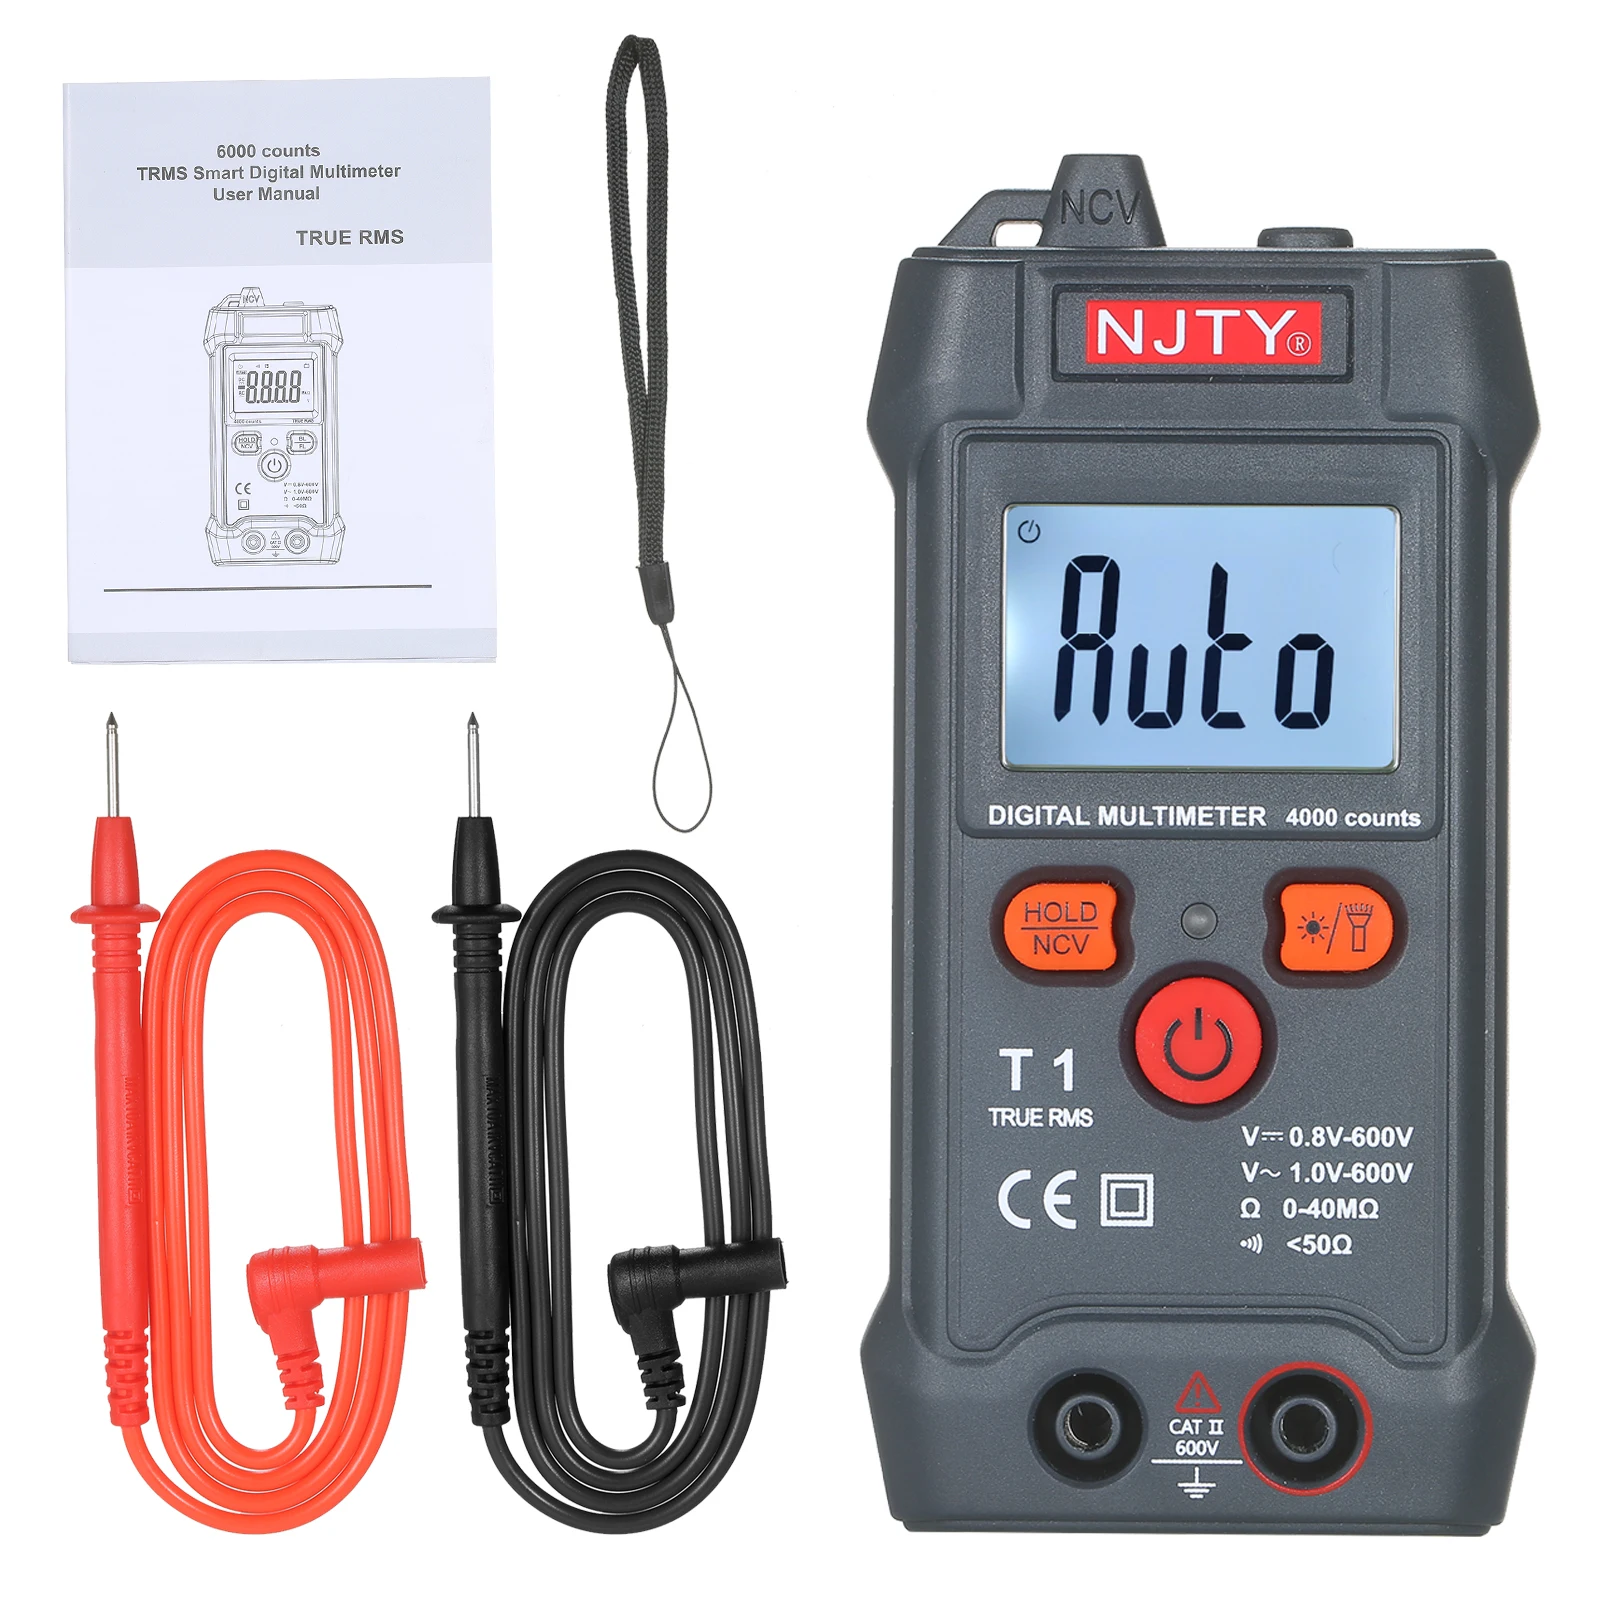 

NJTY Palm-size LCD Digital Multimeter Auto Range NCV 4000 Counts True RMS Smart Universal Tester 600V Ohm Voltage Tester